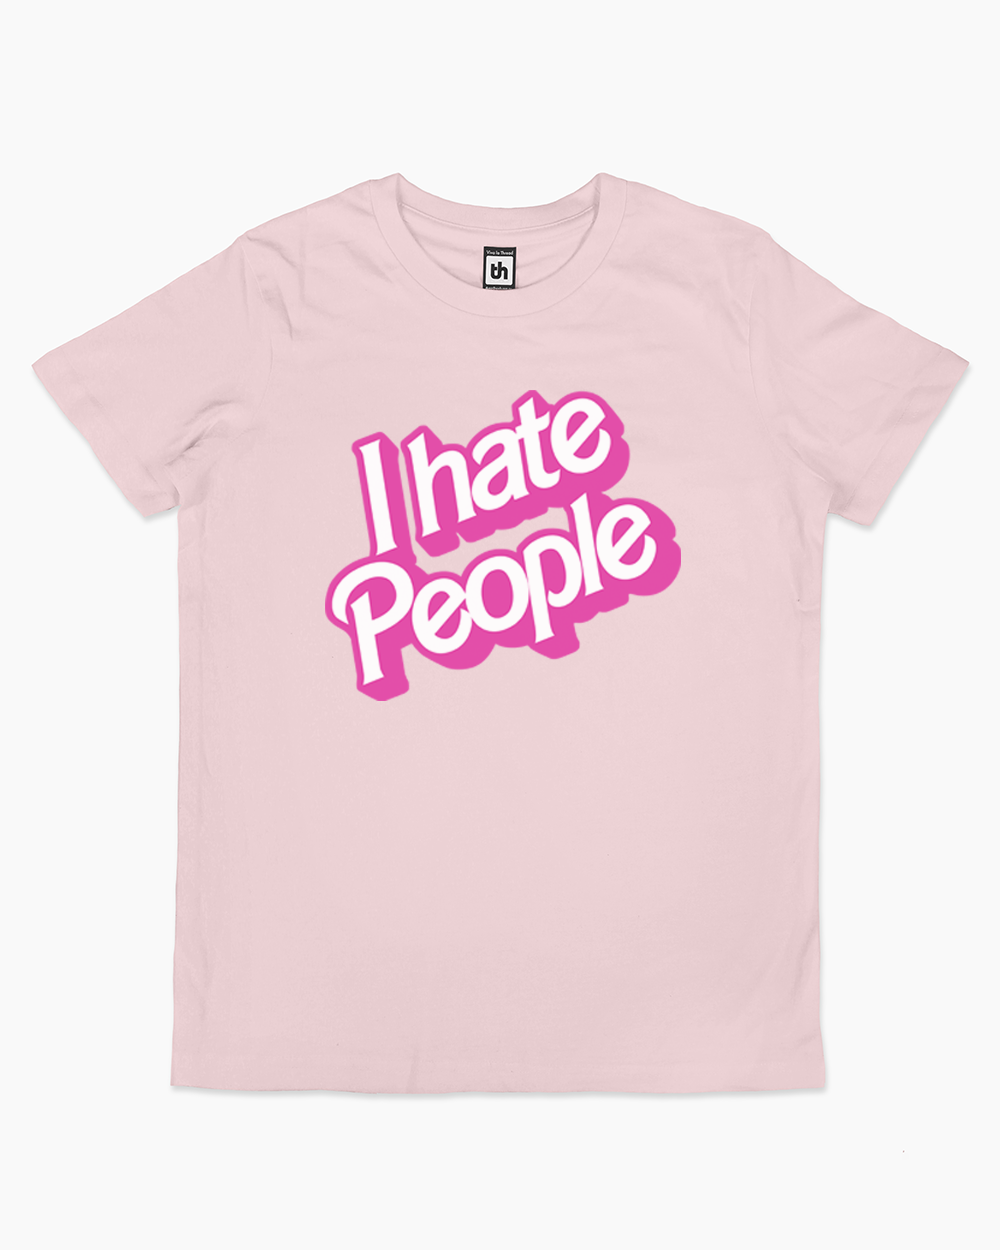 I Hate People Kids T-Shirt Pink